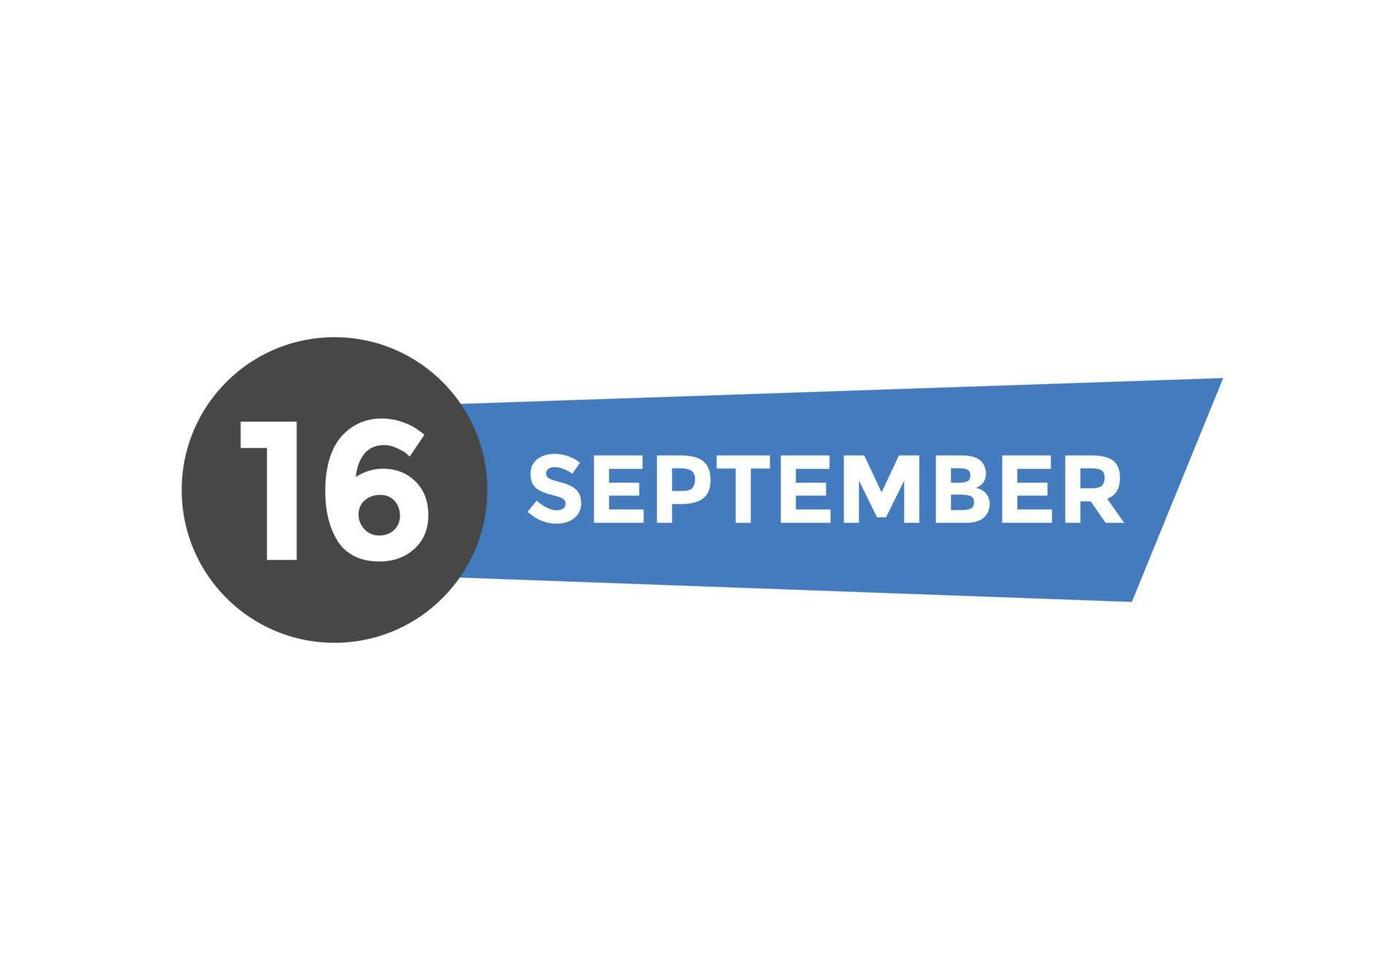 september 16 calendar reminder. 16th september daily calendar icon template. Calendar 16th september icon Design template. Vector illustration